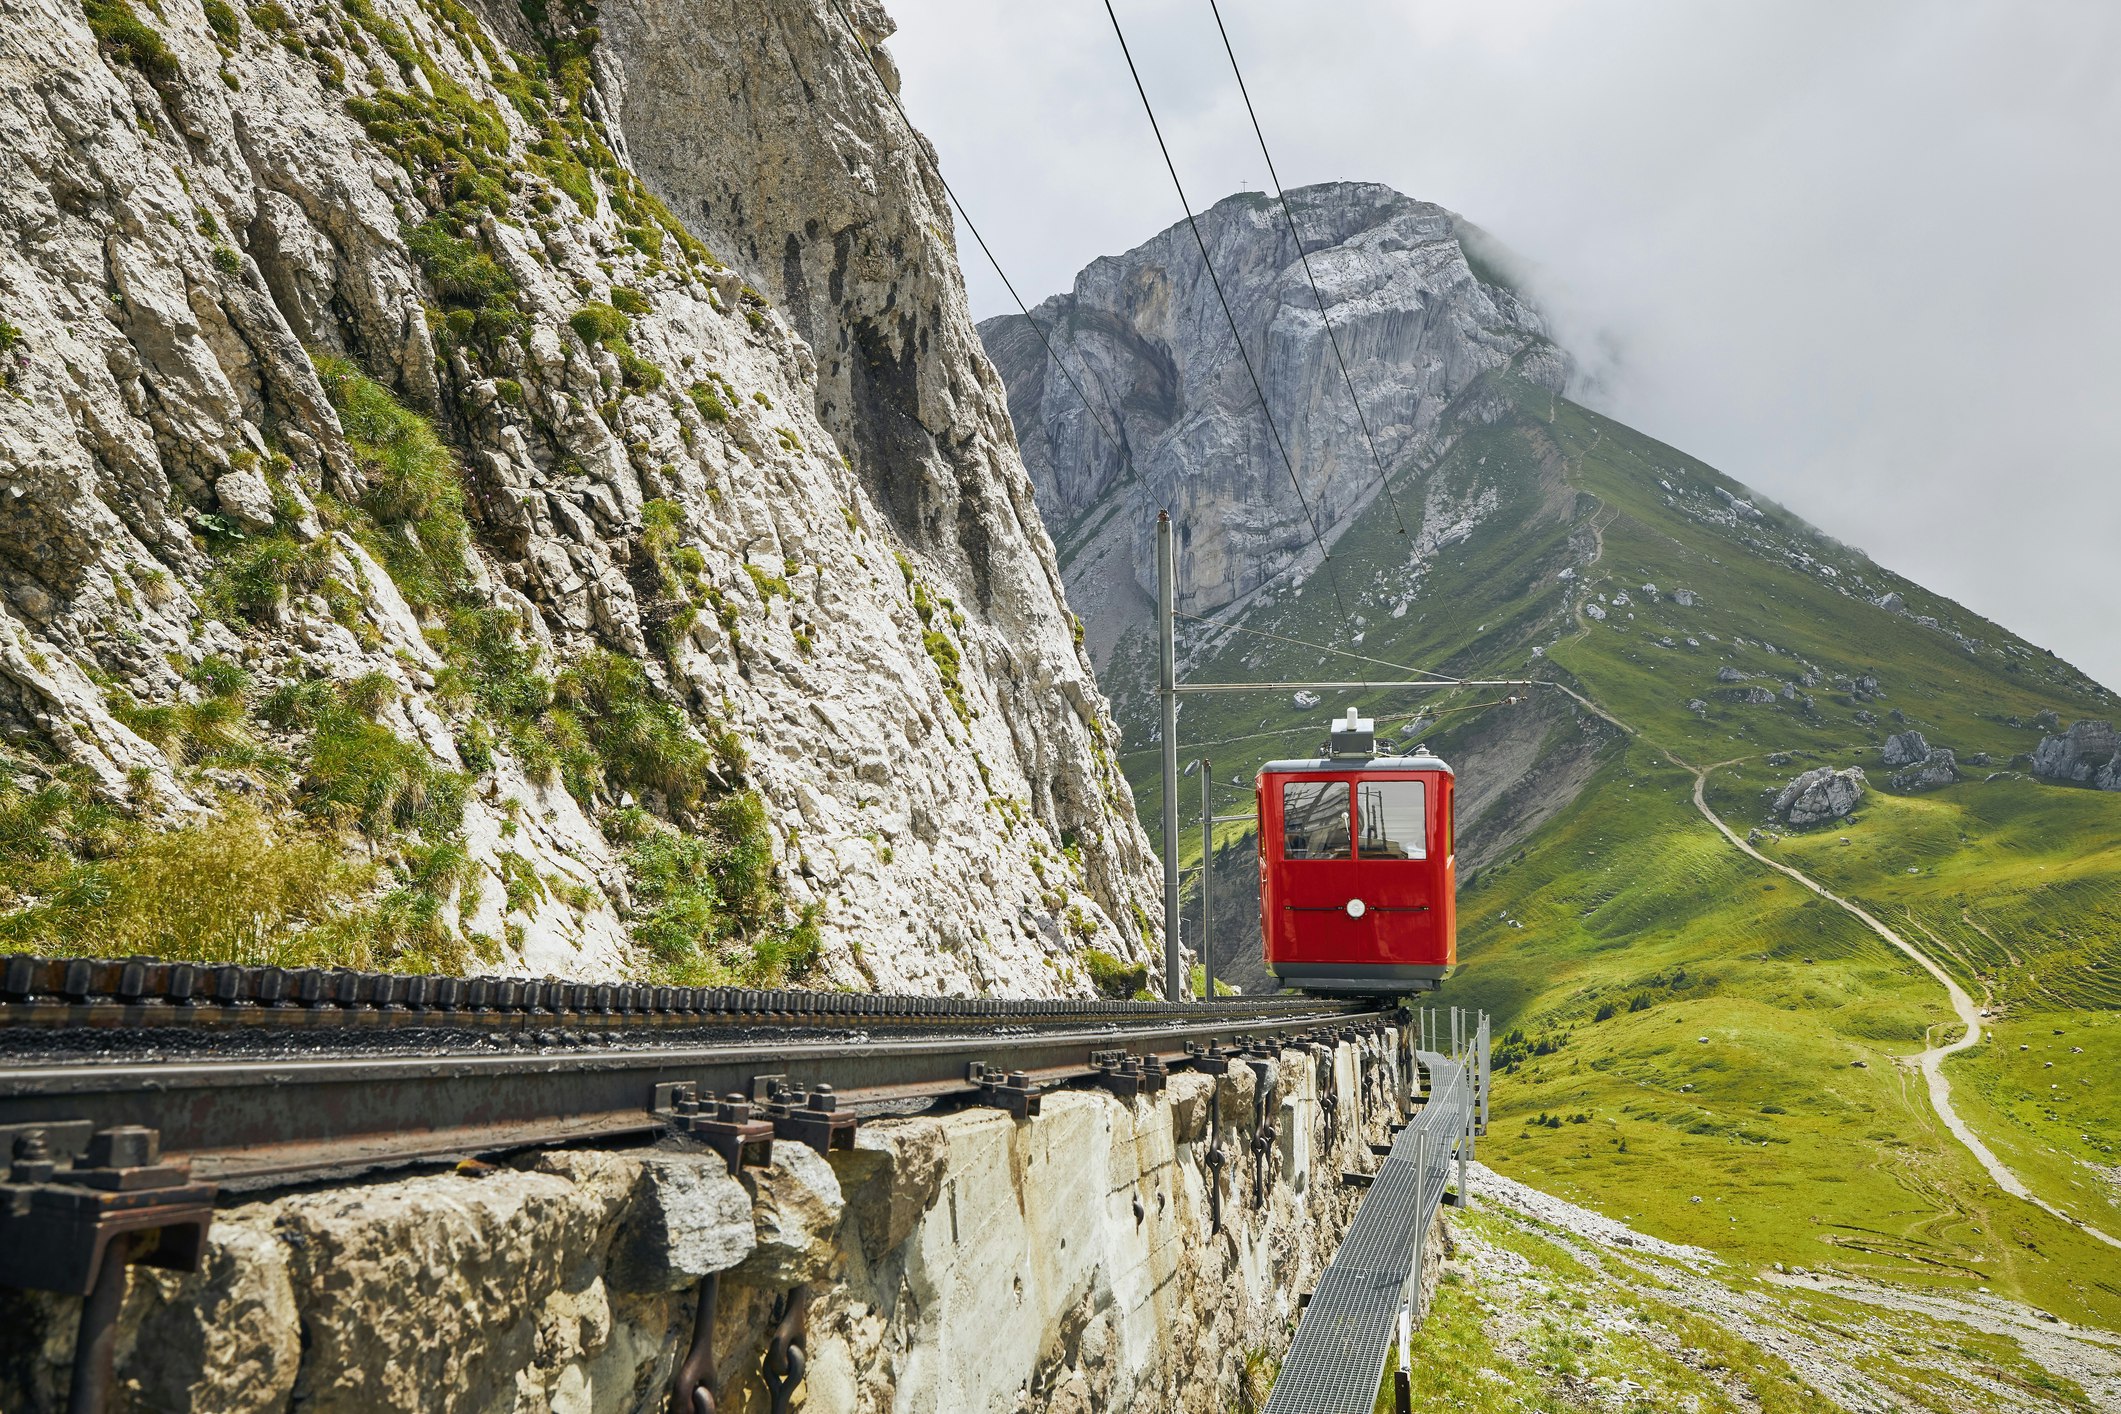 Cogwheel train passing mountain landscape of Mount Pilatus in the Swiss Alps, near Lucerne